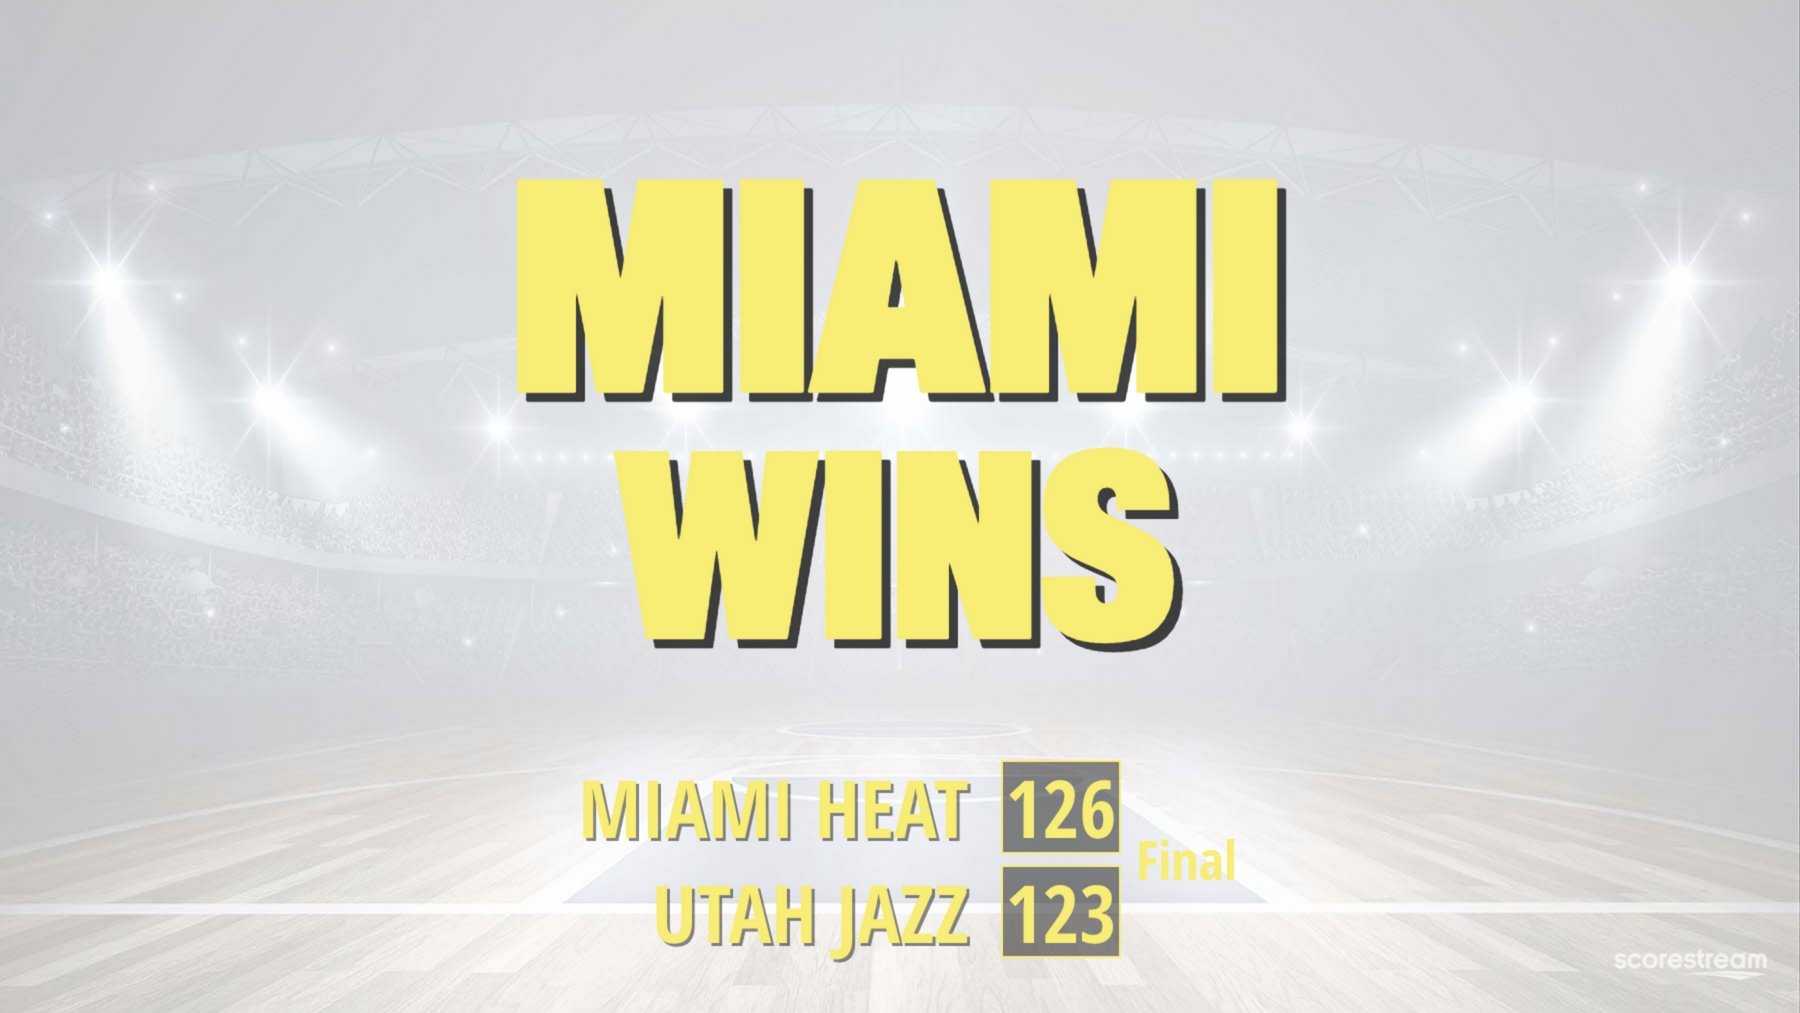 Miami Heat beat the Utah Jazz in the NBA today